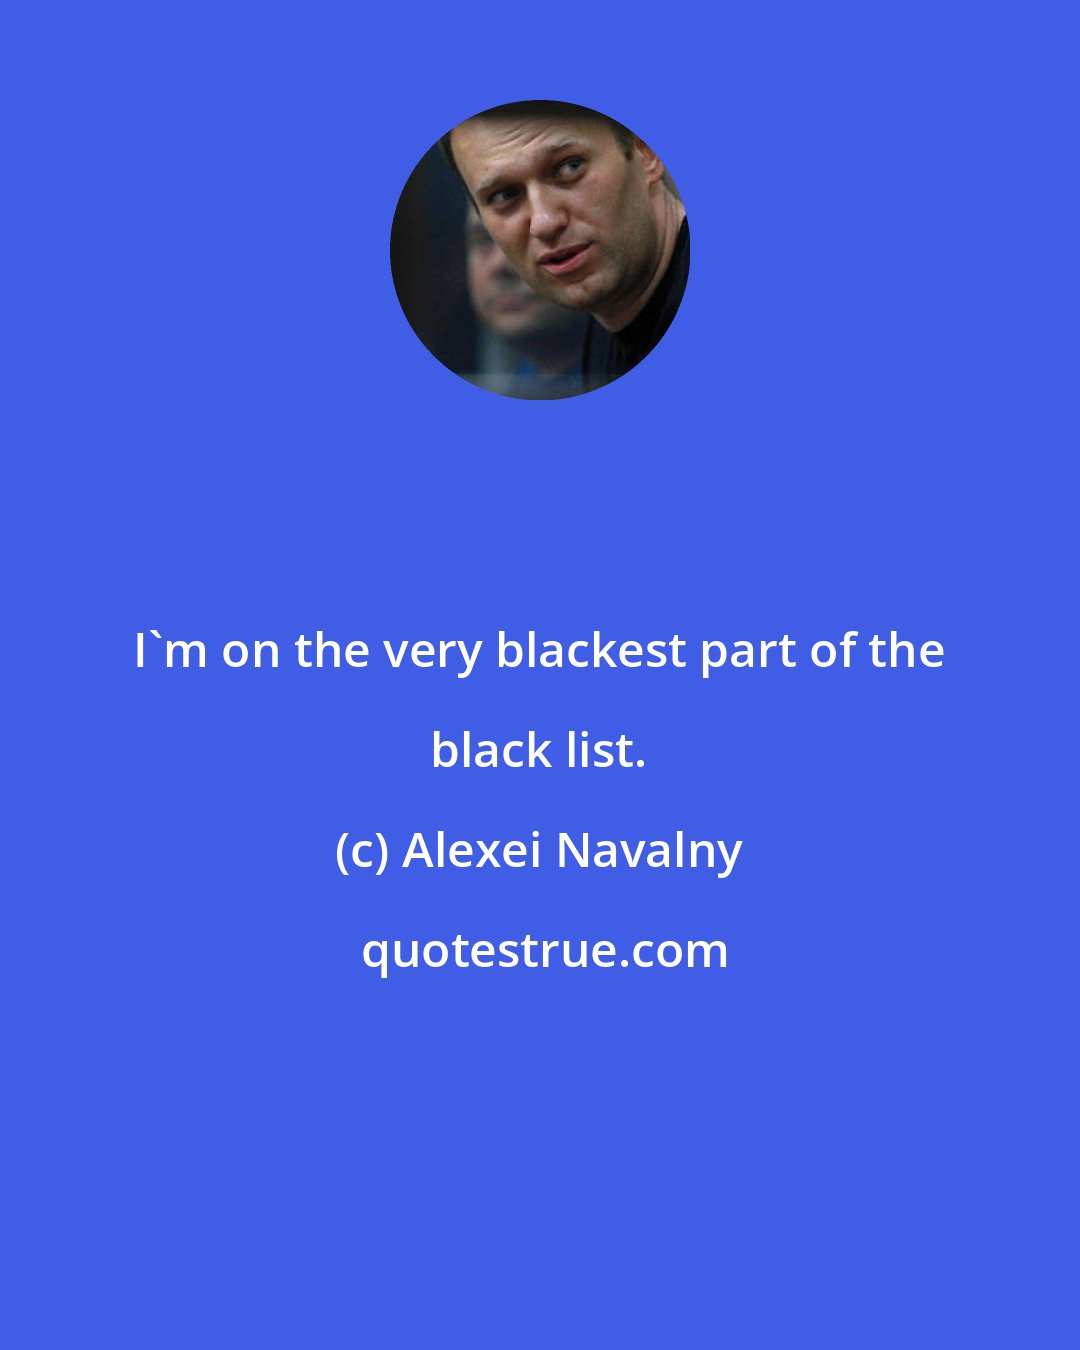 Alexei Navalny: I'm on the very blackest part of the black list.